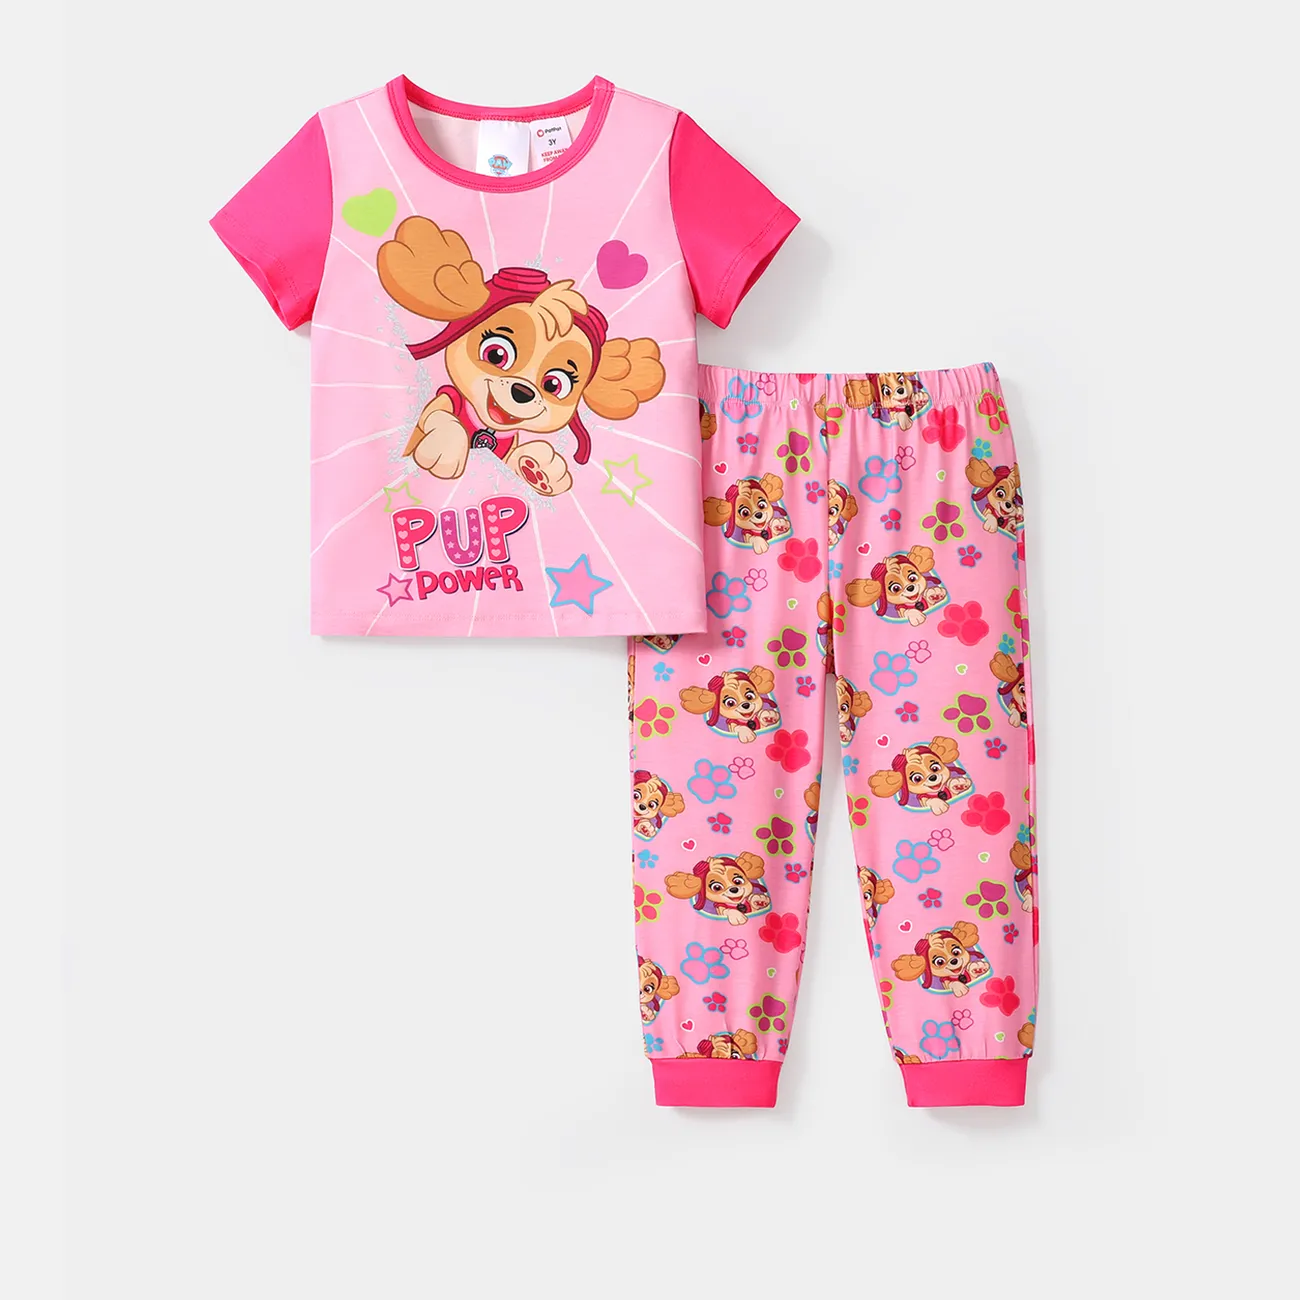 PAW Patrol Toddler Girl/Boy Short-sleeve Tee and Pants Pajamas Set Pink big image 1